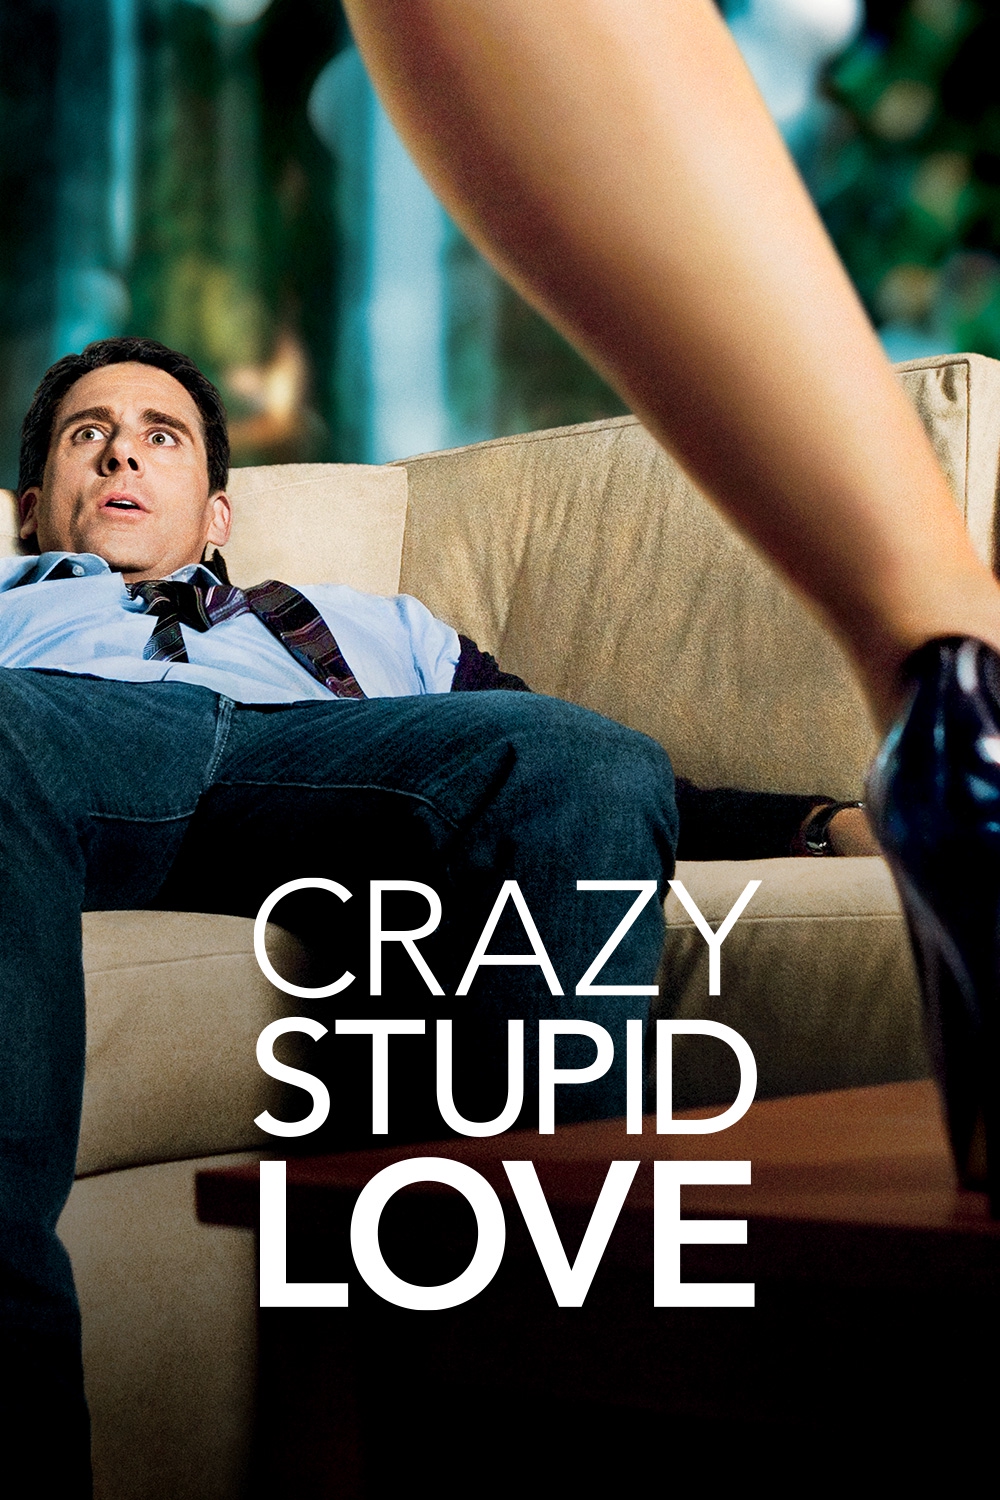 Crazy, Stupid, Love. - TV Spot #1 